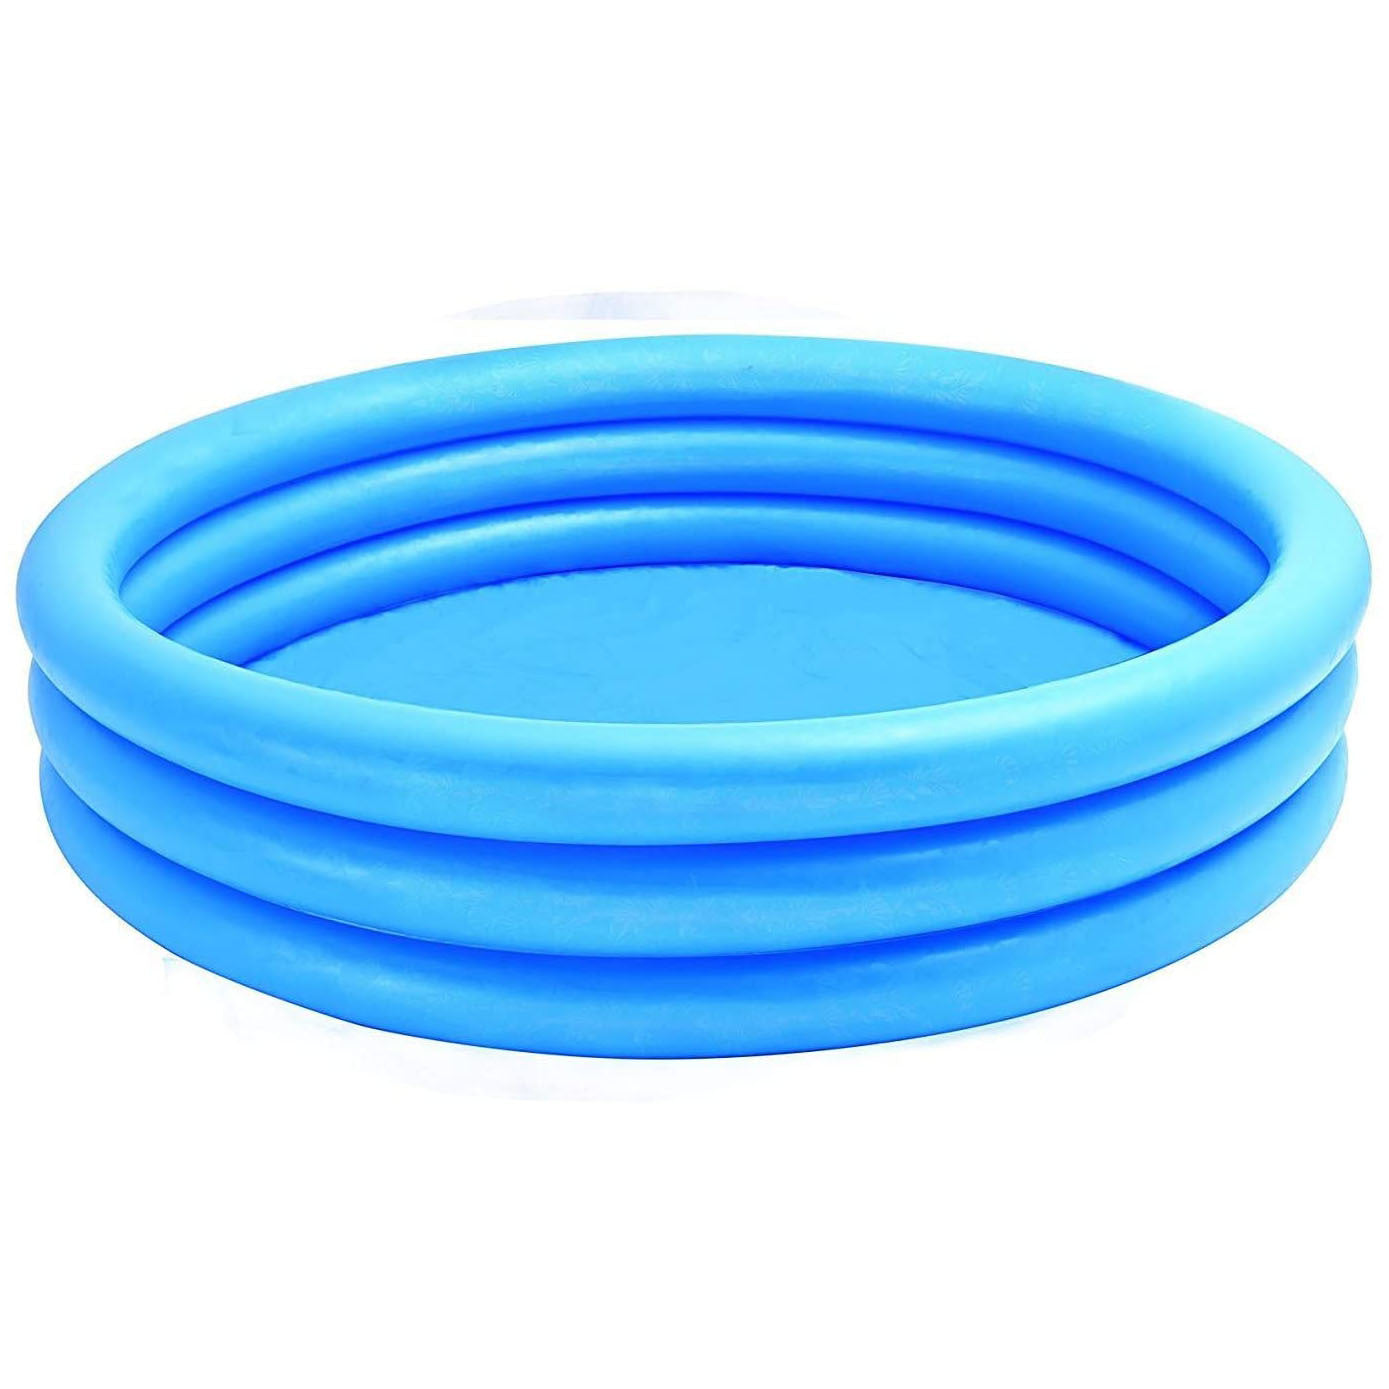 Intex 3 Ring Crystal Blue Pool